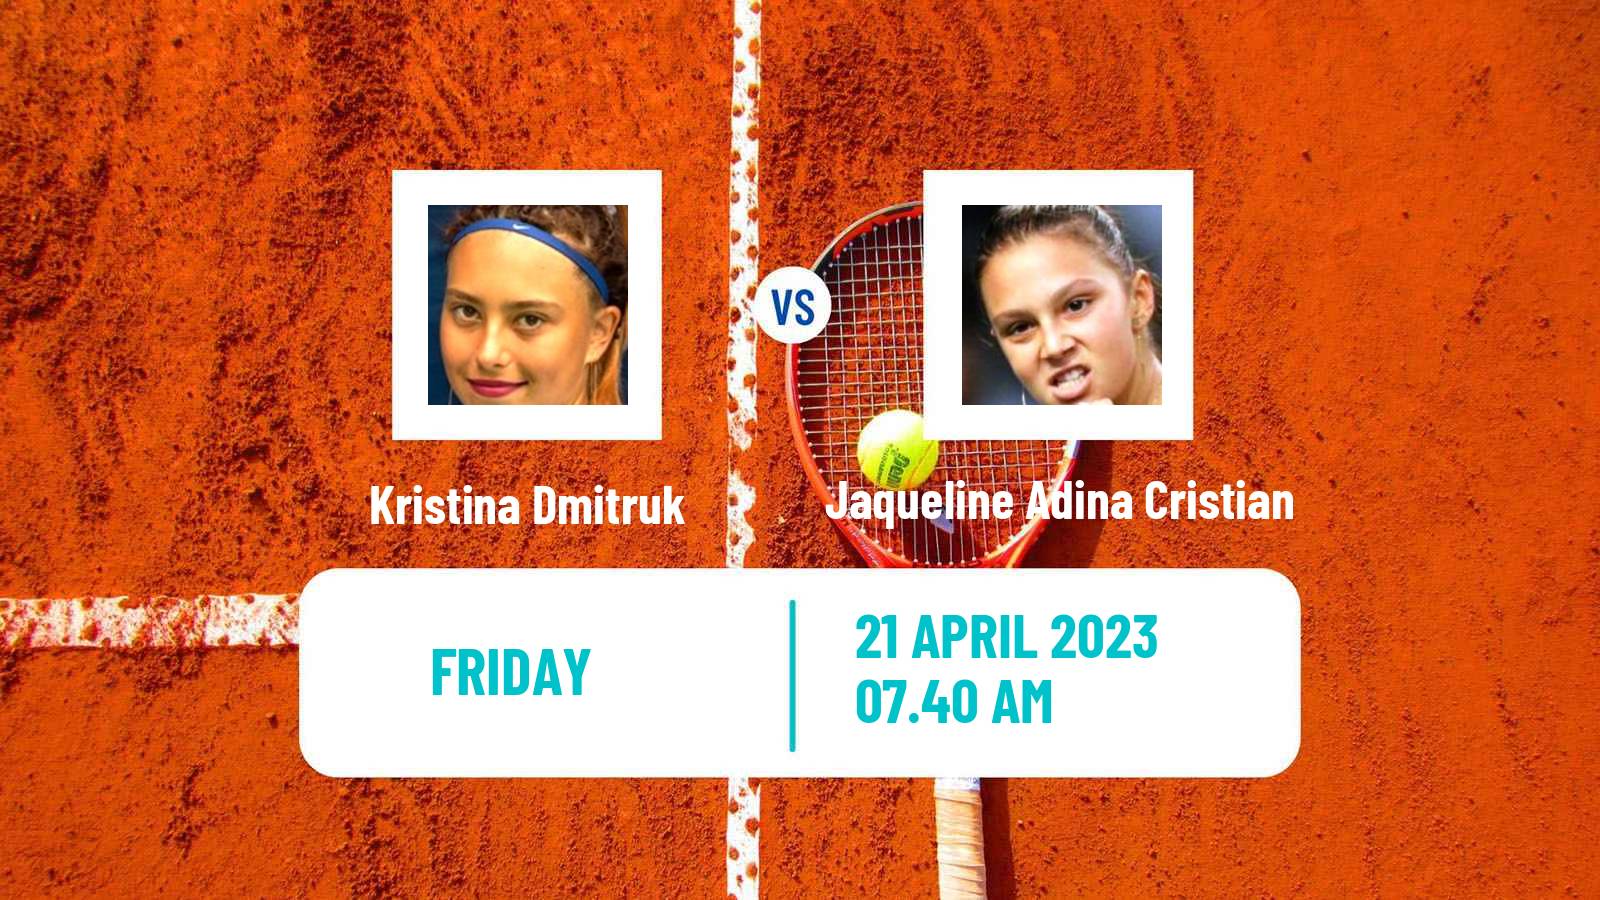 Tennis ITF Tournaments Kristina Dmitruk - Jaqueline Adina Cristian